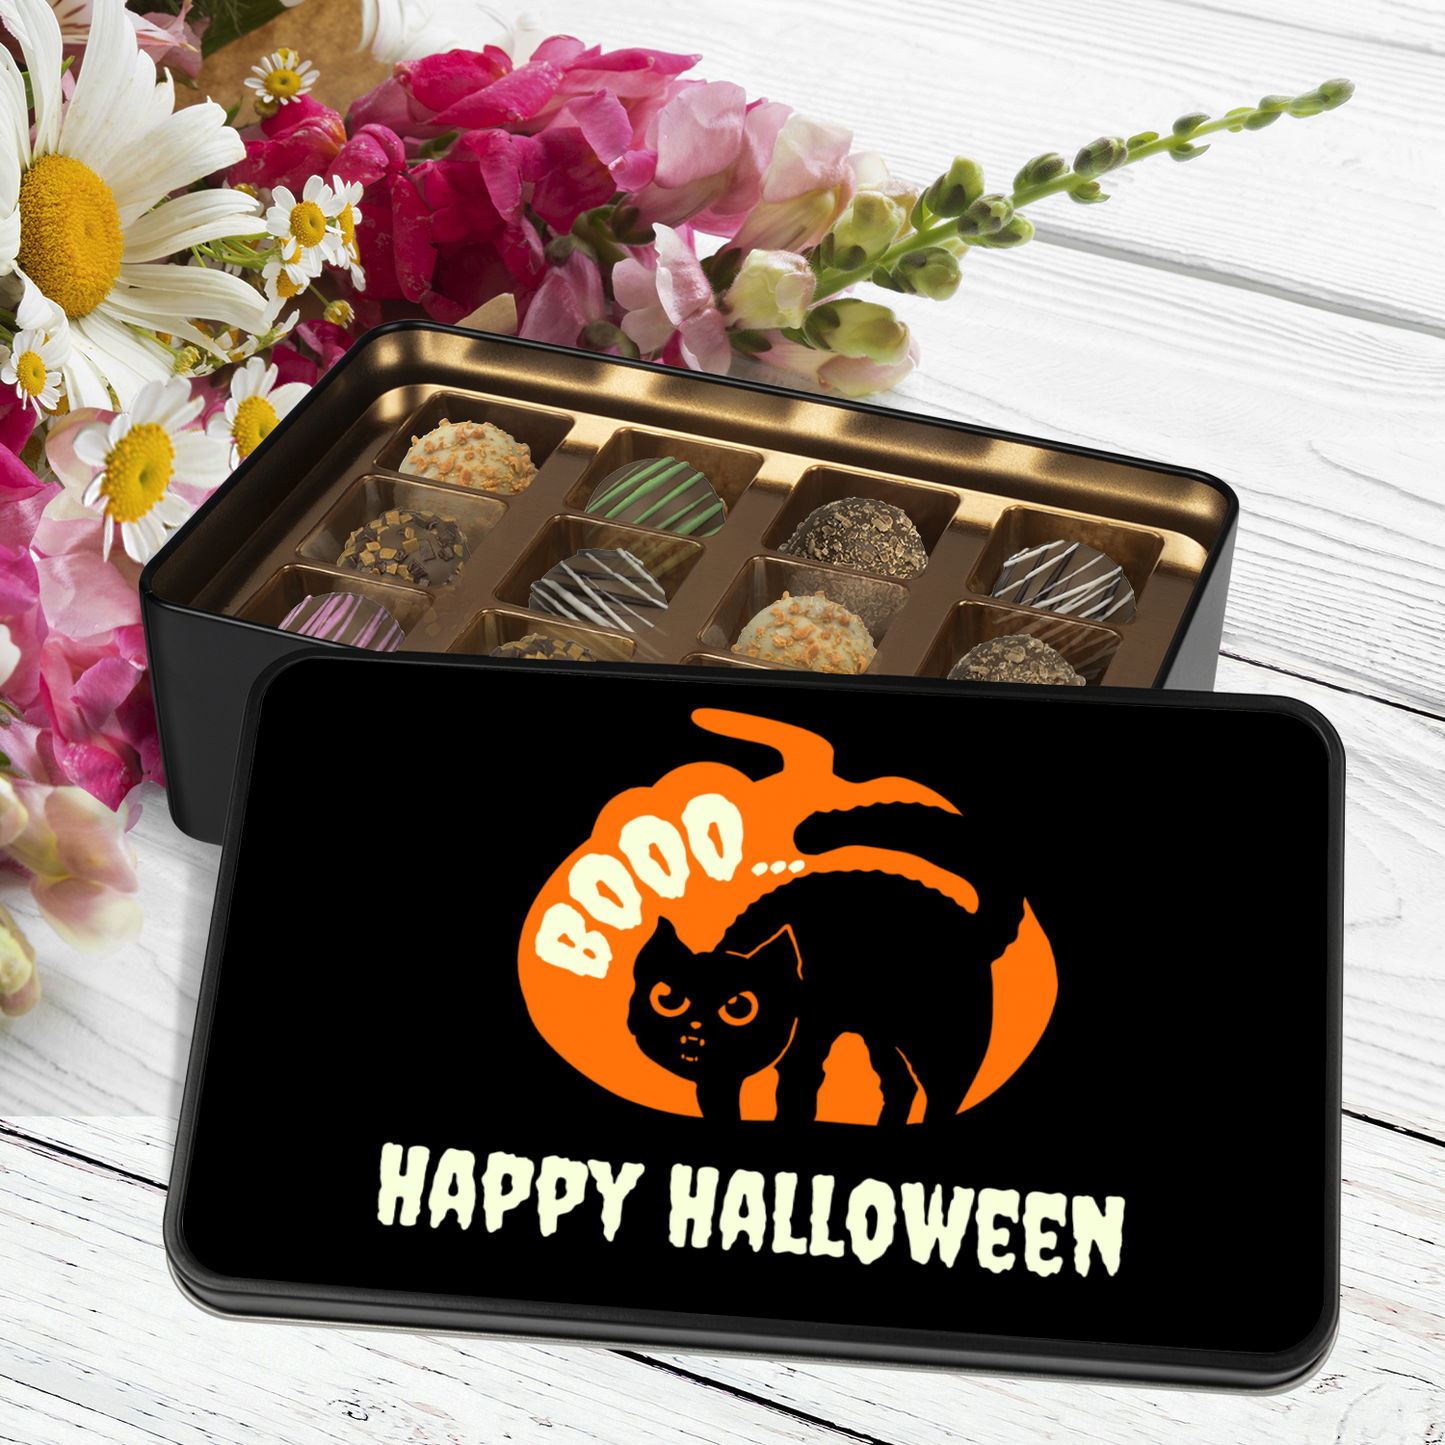 Happy Halloween Chocolate Truffles -Keepsake Tin